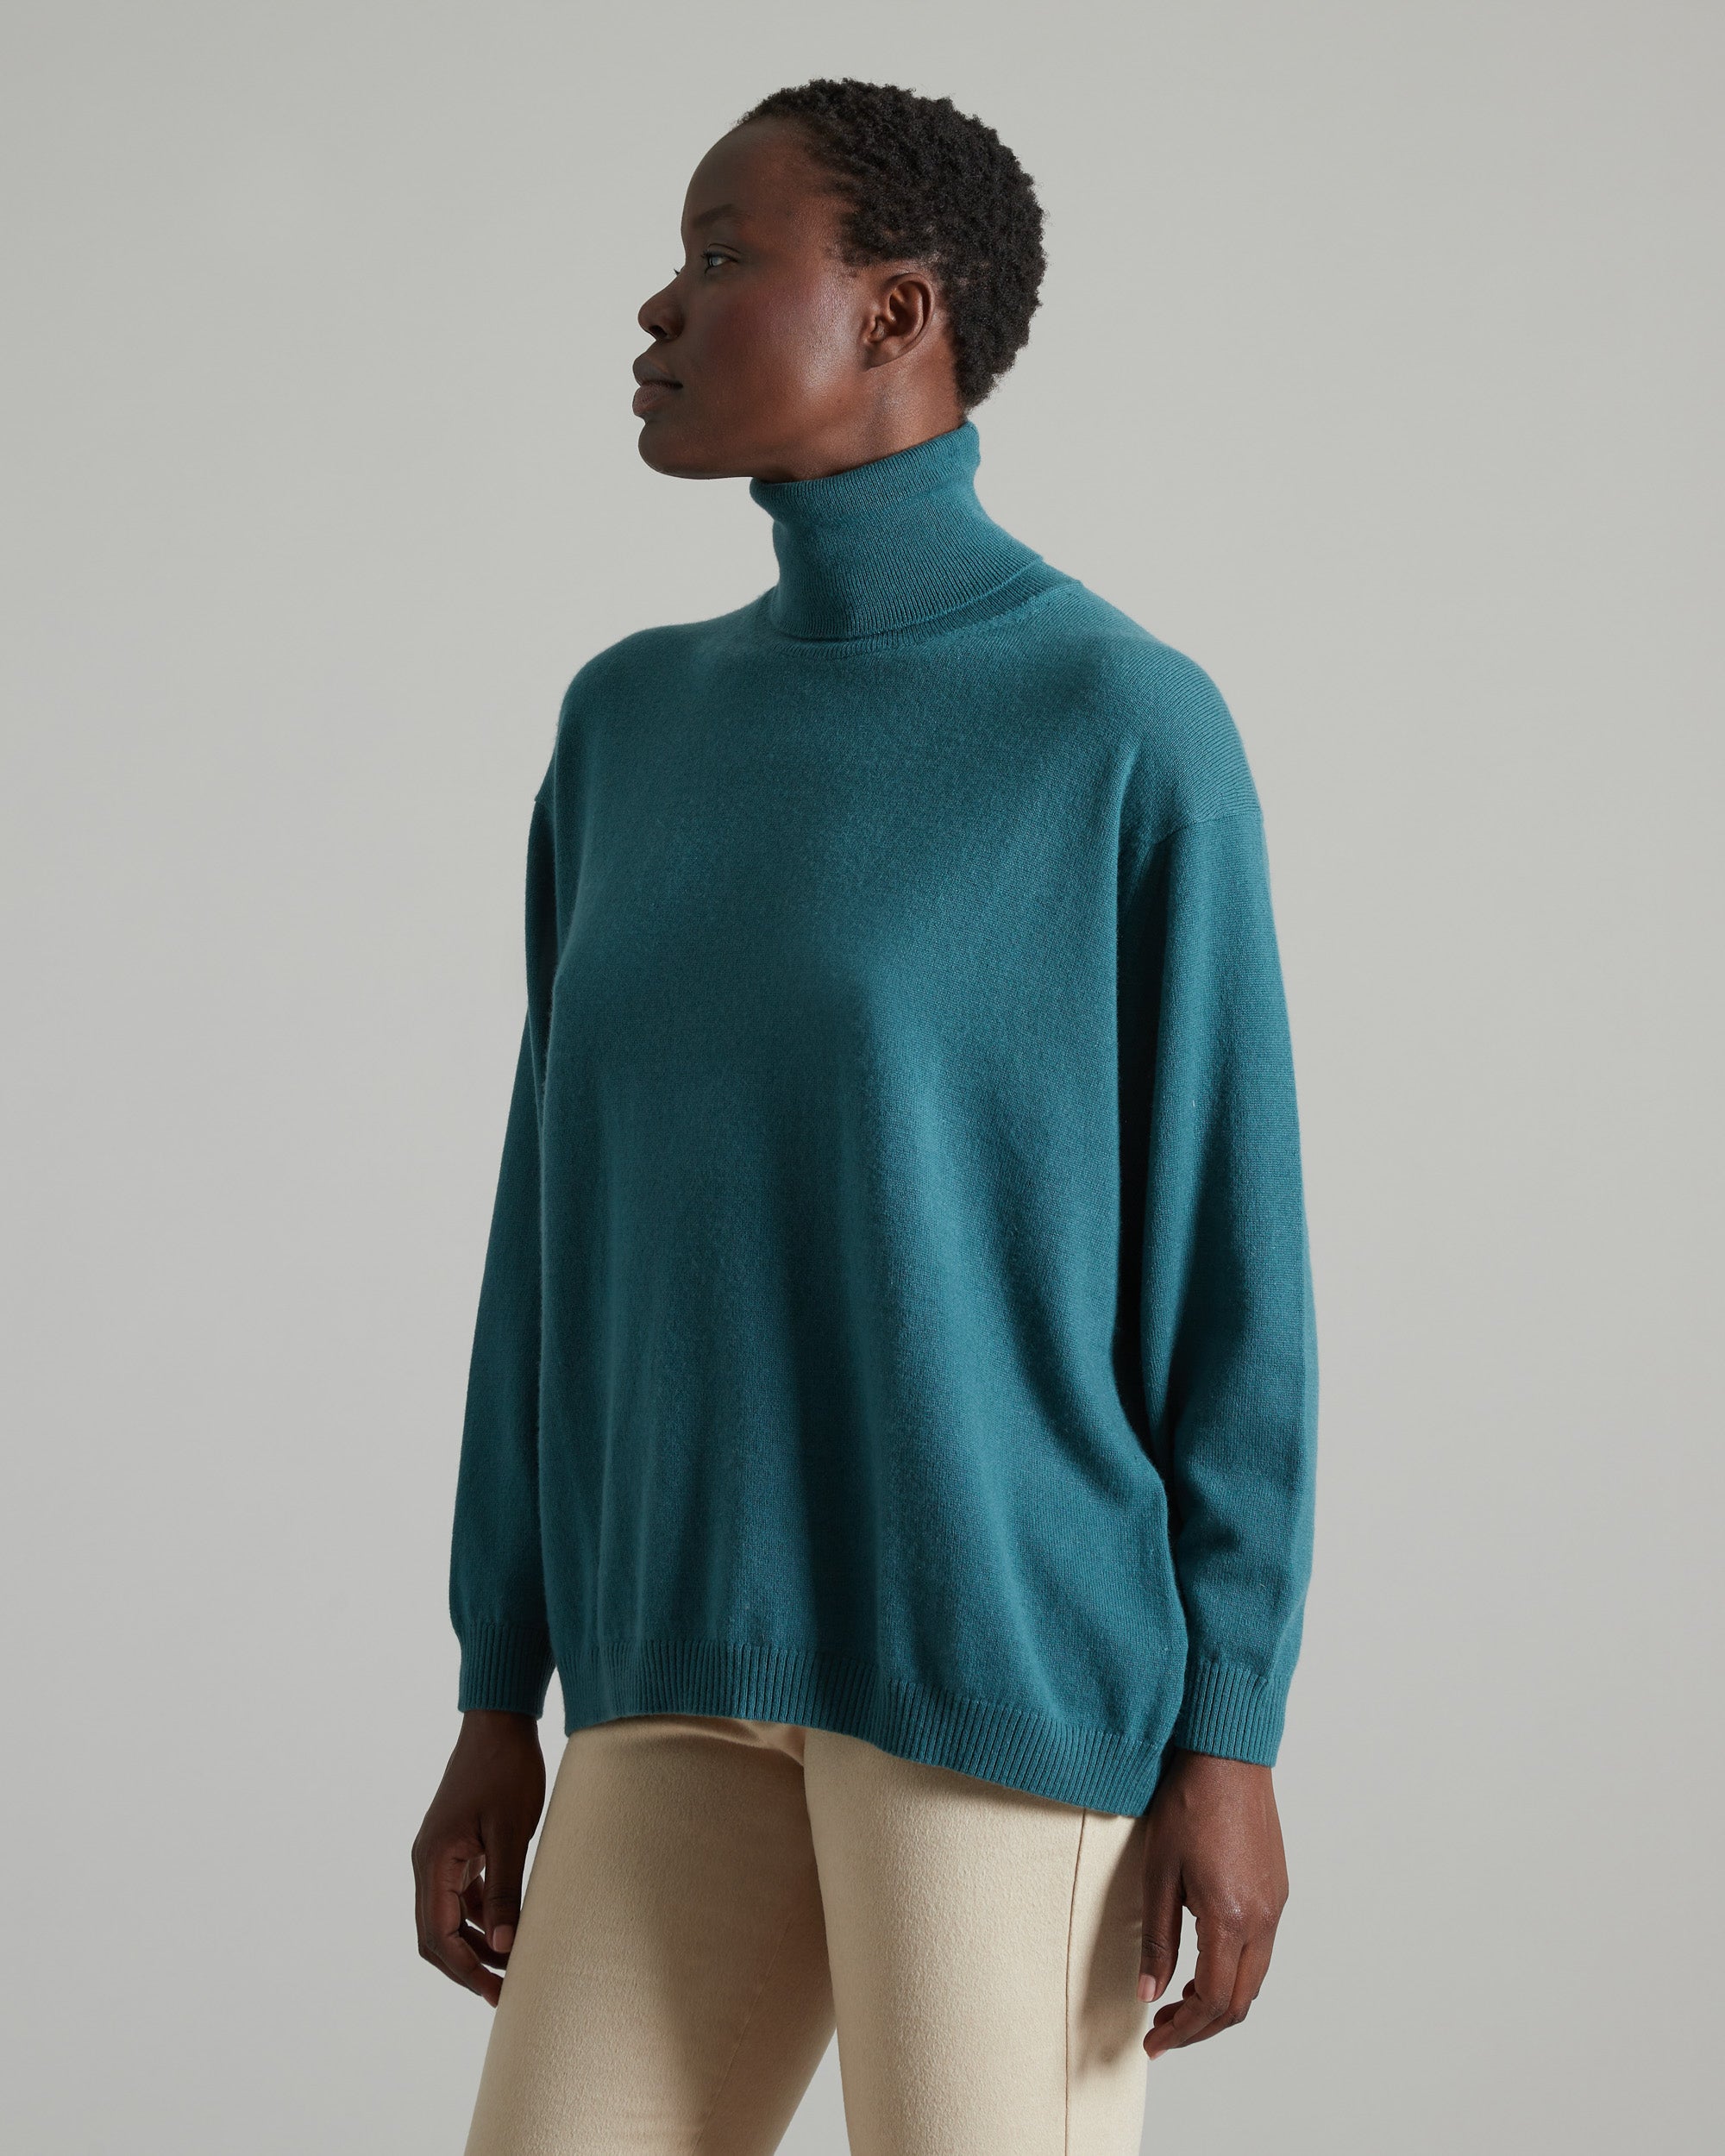 Green Kid Cashmere turtleneck sweater